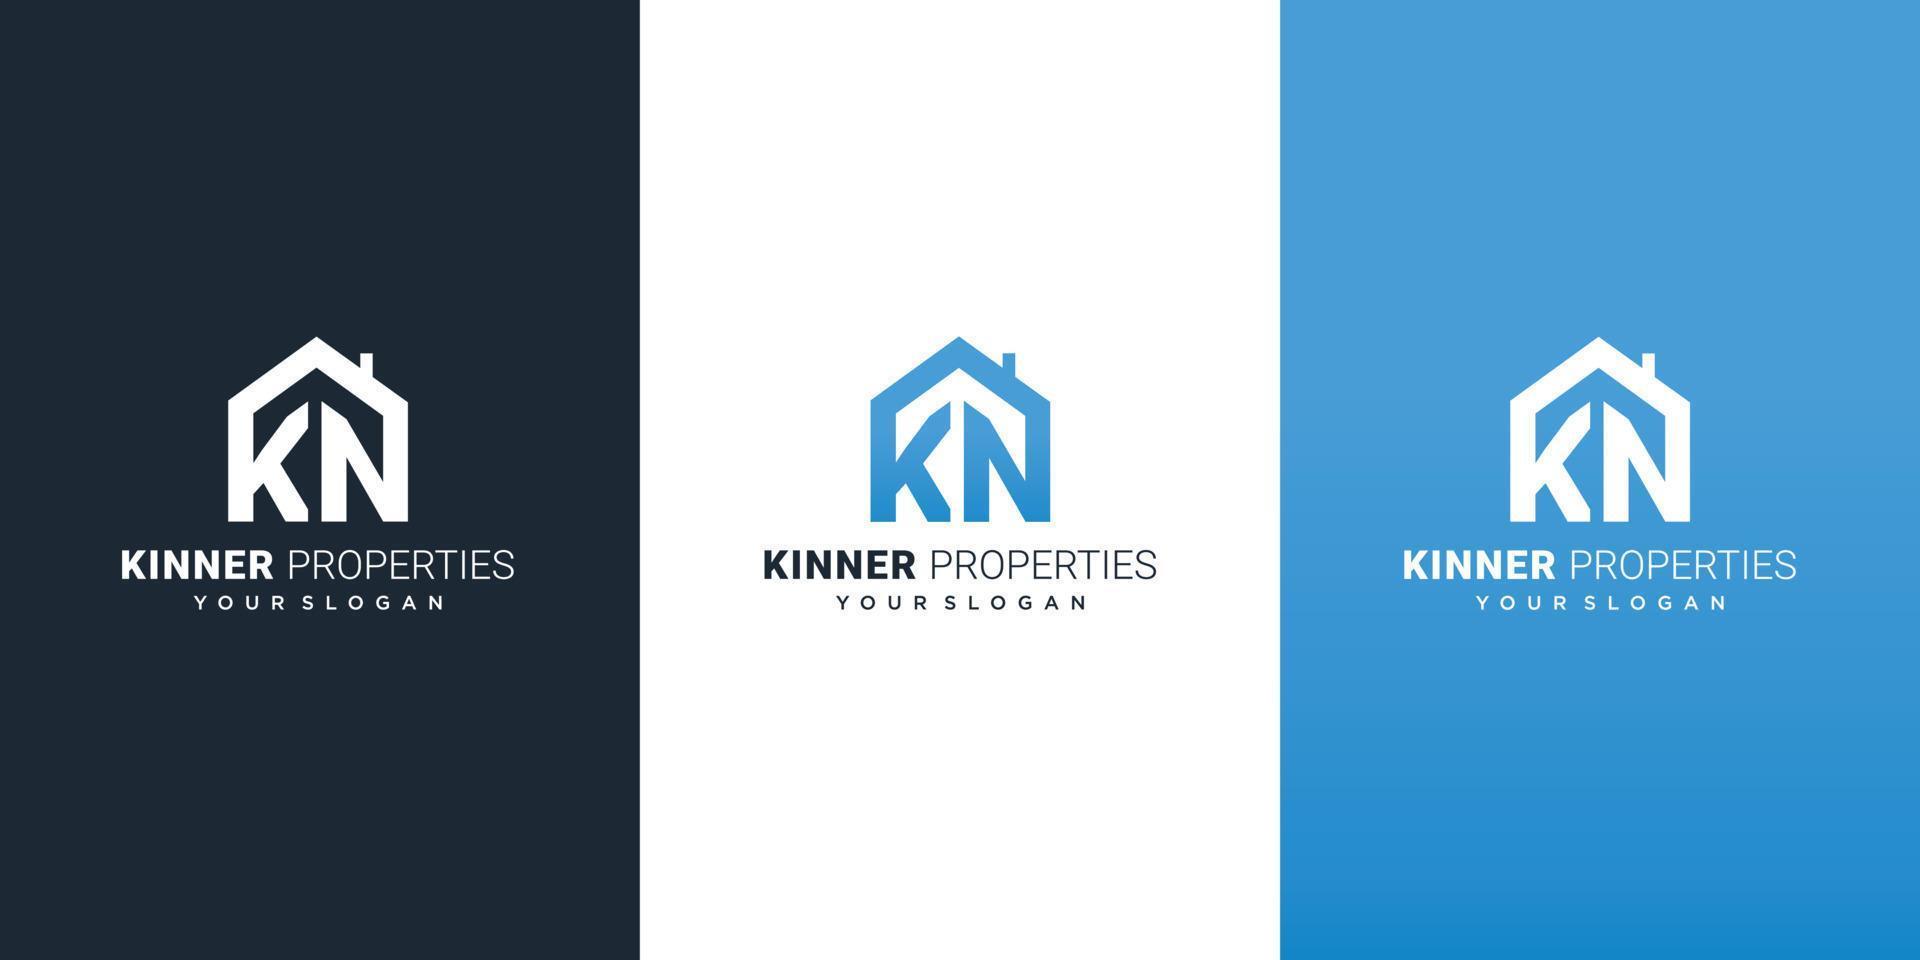 design de logotipo kn, ícone kn, design de logotipo imobiliário com kn, ícone de logotipo imobiliário com cor azul branca e escura vetor